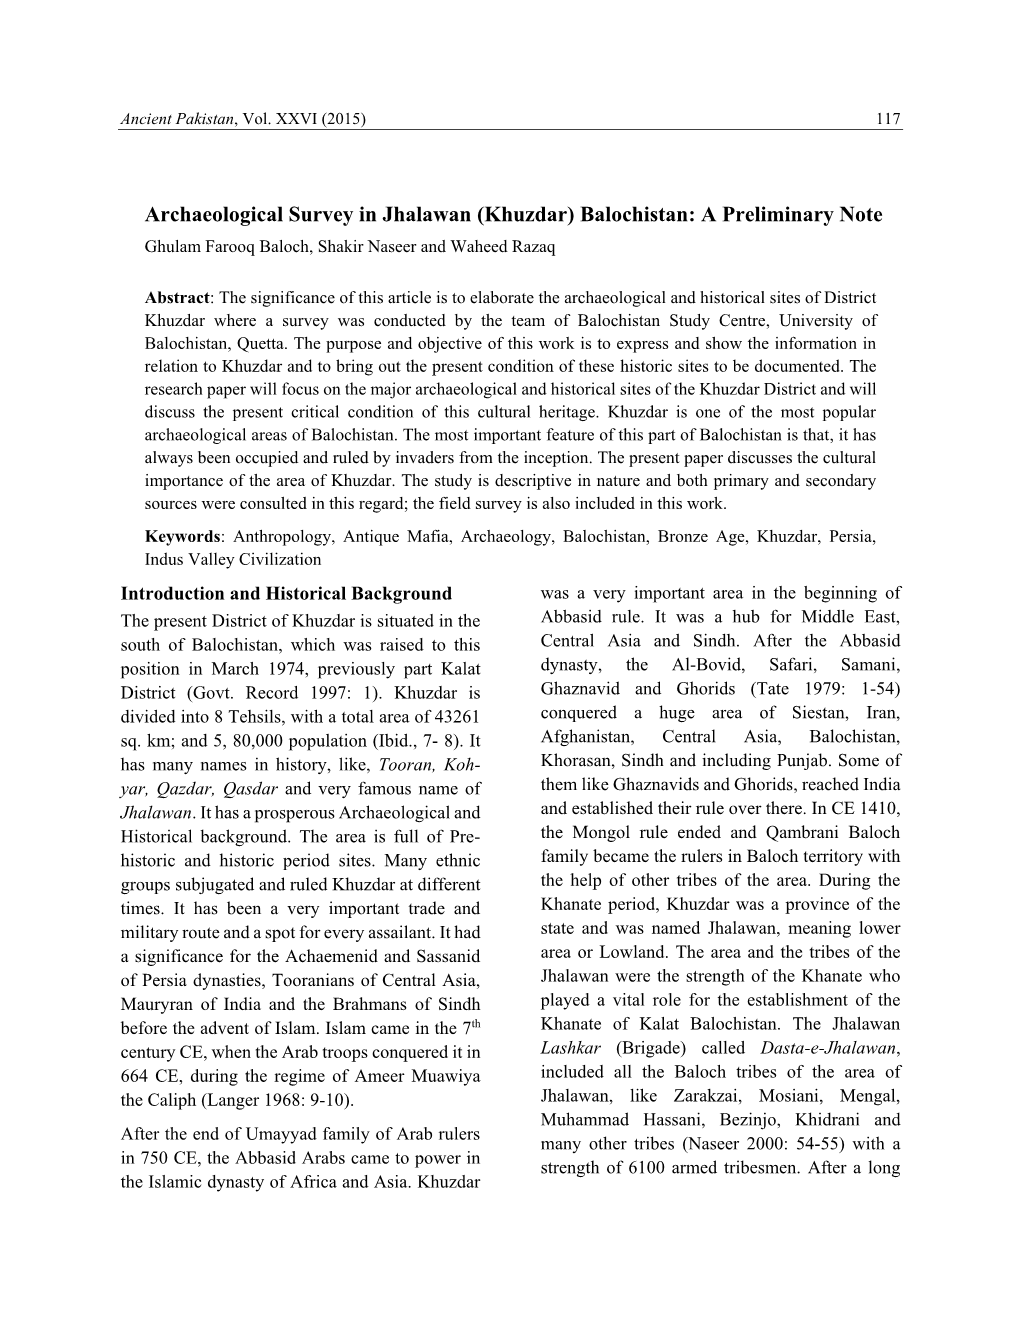 (Khuzdar) Balochistan: a Preliminary Note Ghulam Farooq Baloch, Shakir Naseer and Waheed Razaq